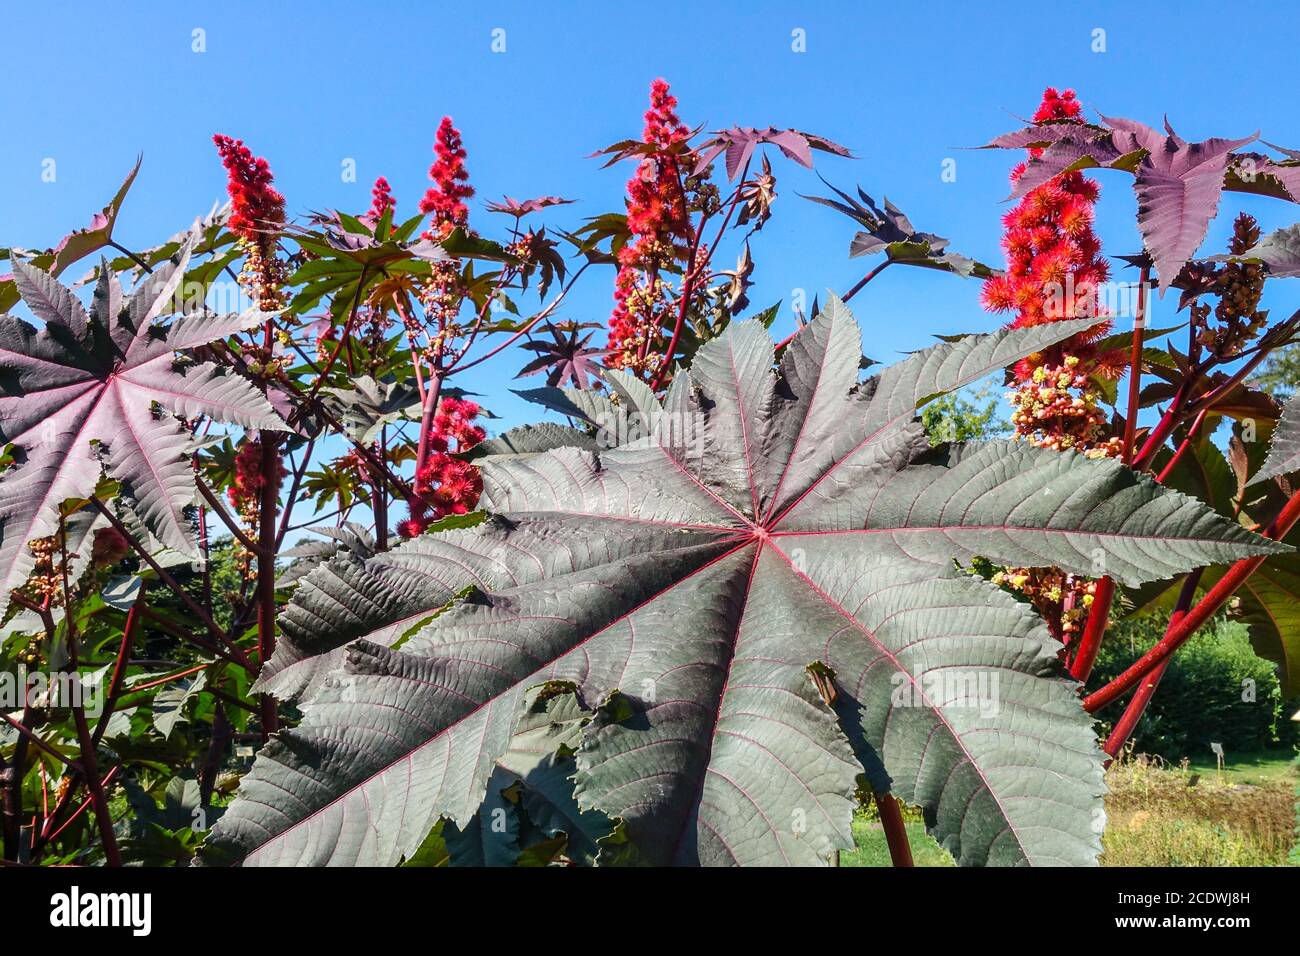 Castor Beans Ricinus communis 'Red Giant' Stock Photo